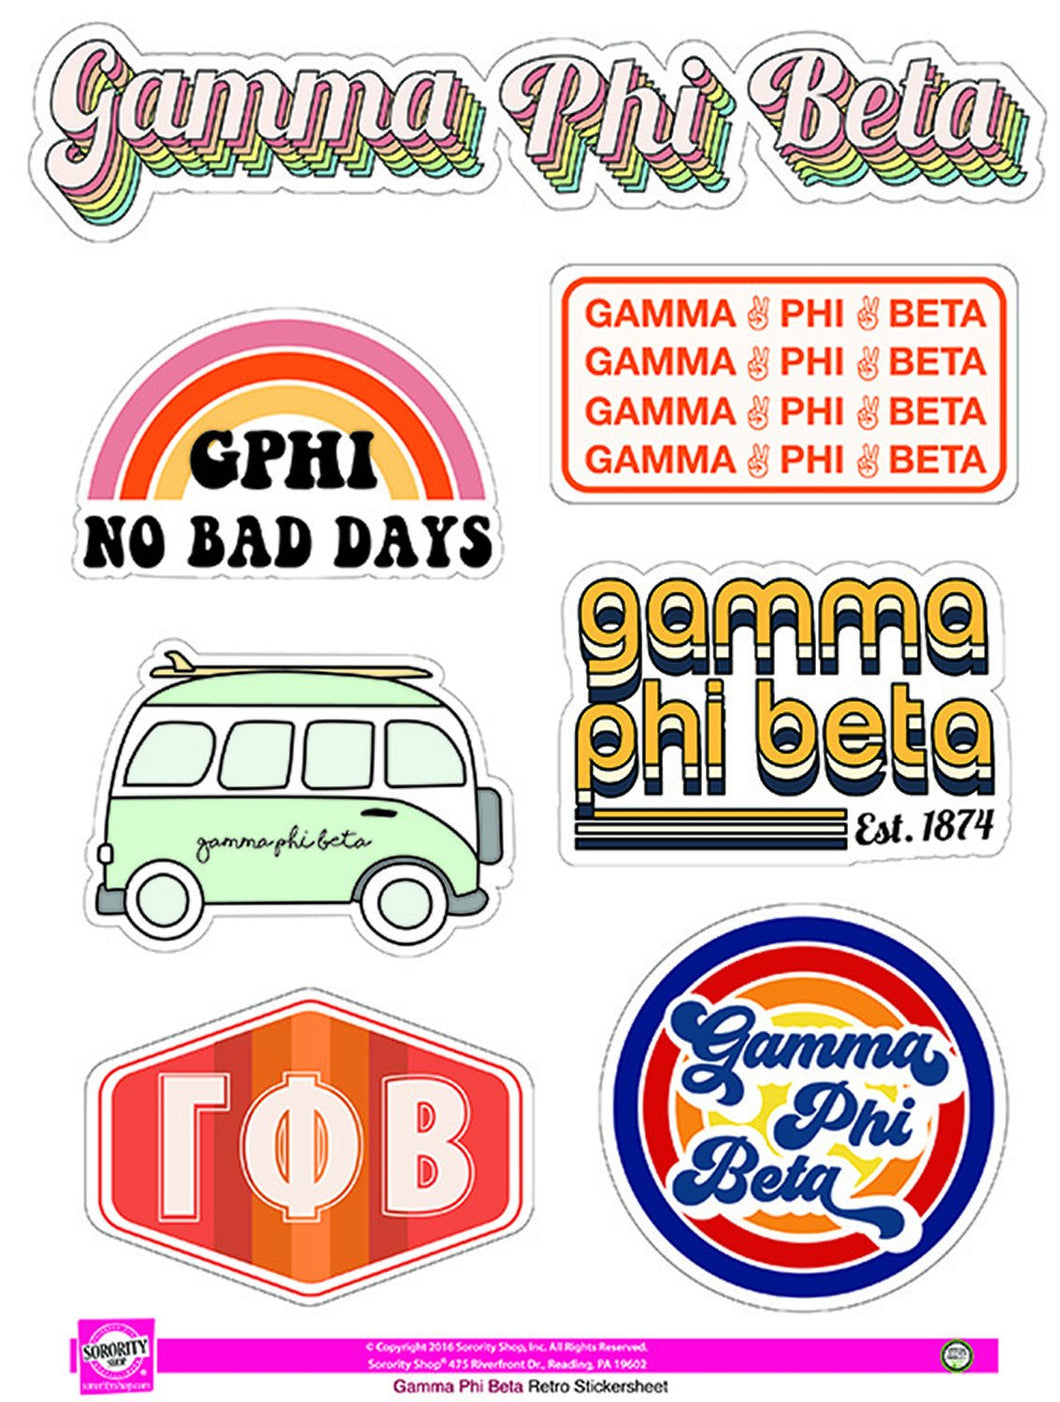 Retro Sticker Sheet - Gamma Phi Beta